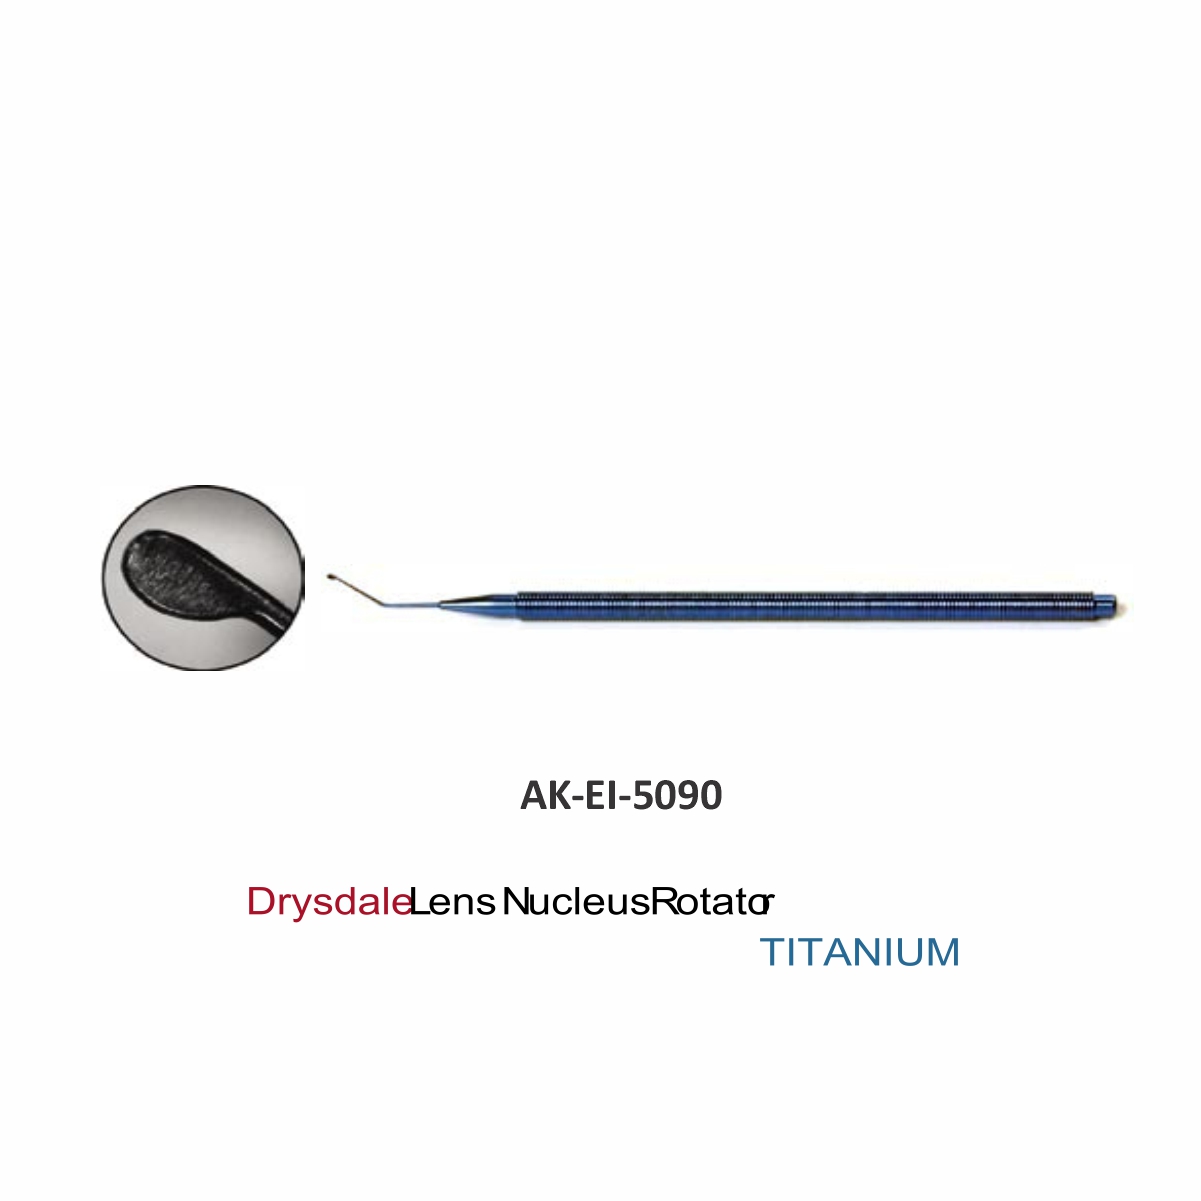 Drysdale Lens Nucleus Rotator